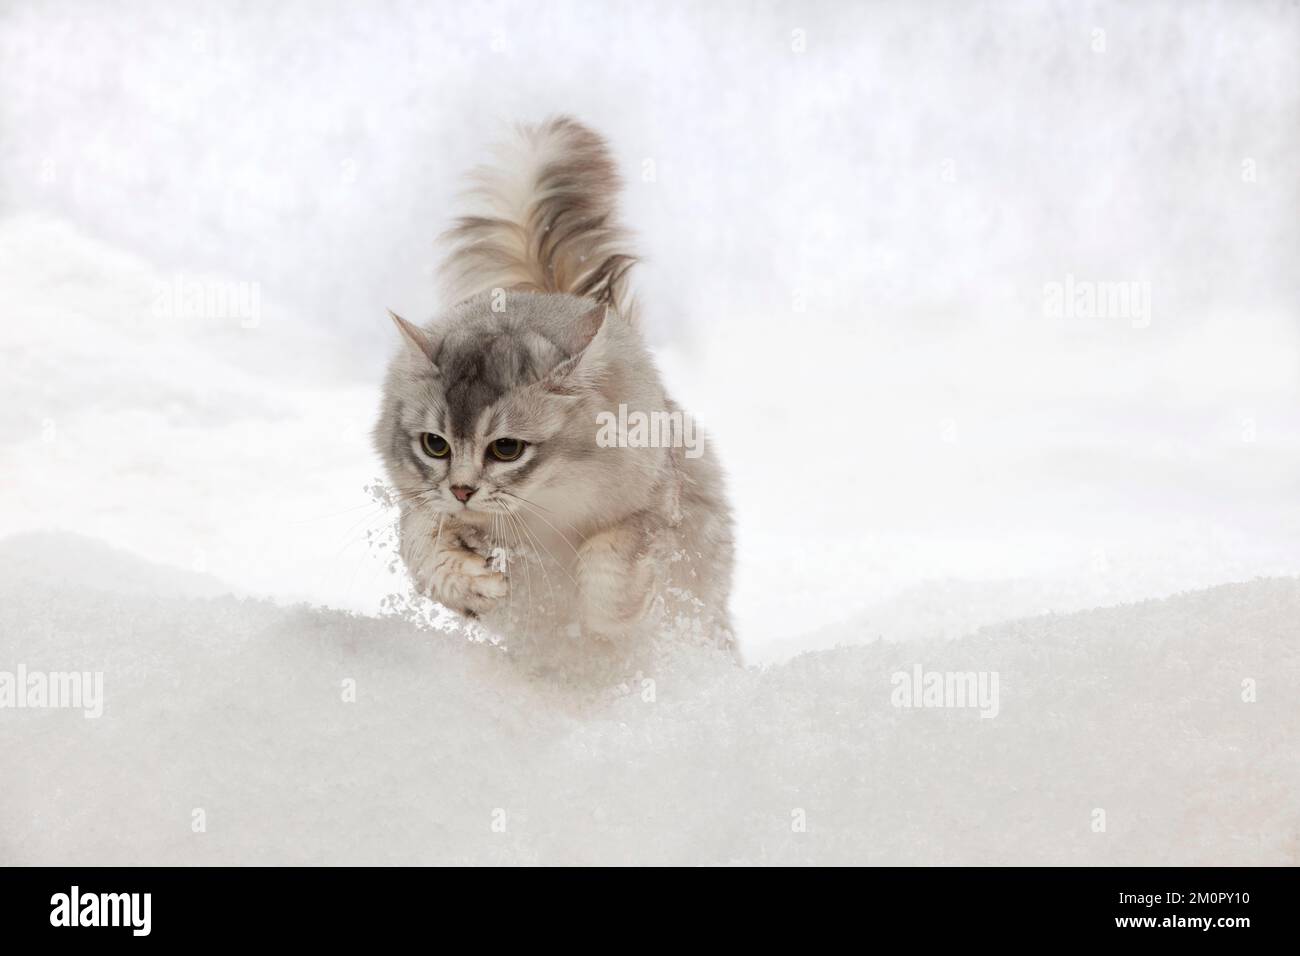 CAT - Tiffanie cat jumping in snow Stock Photo